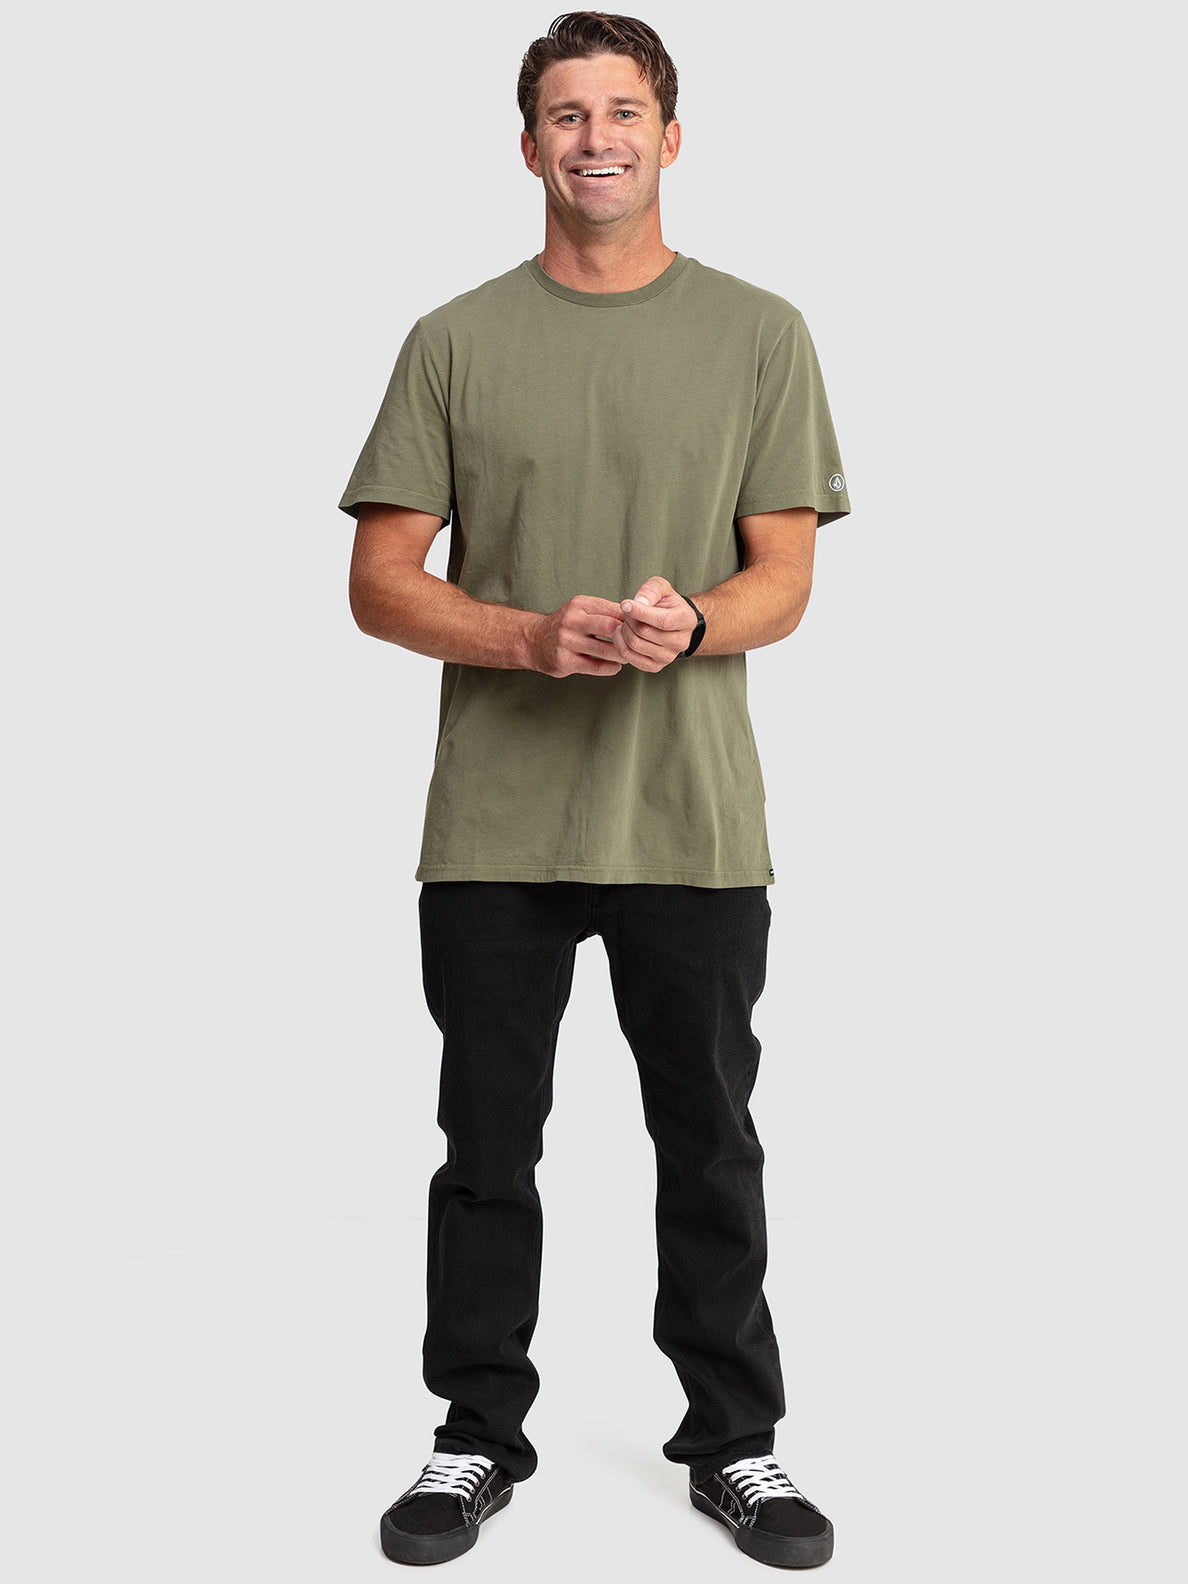 Aus Wash Short Sleeve T-Shirt - Army Green Combo